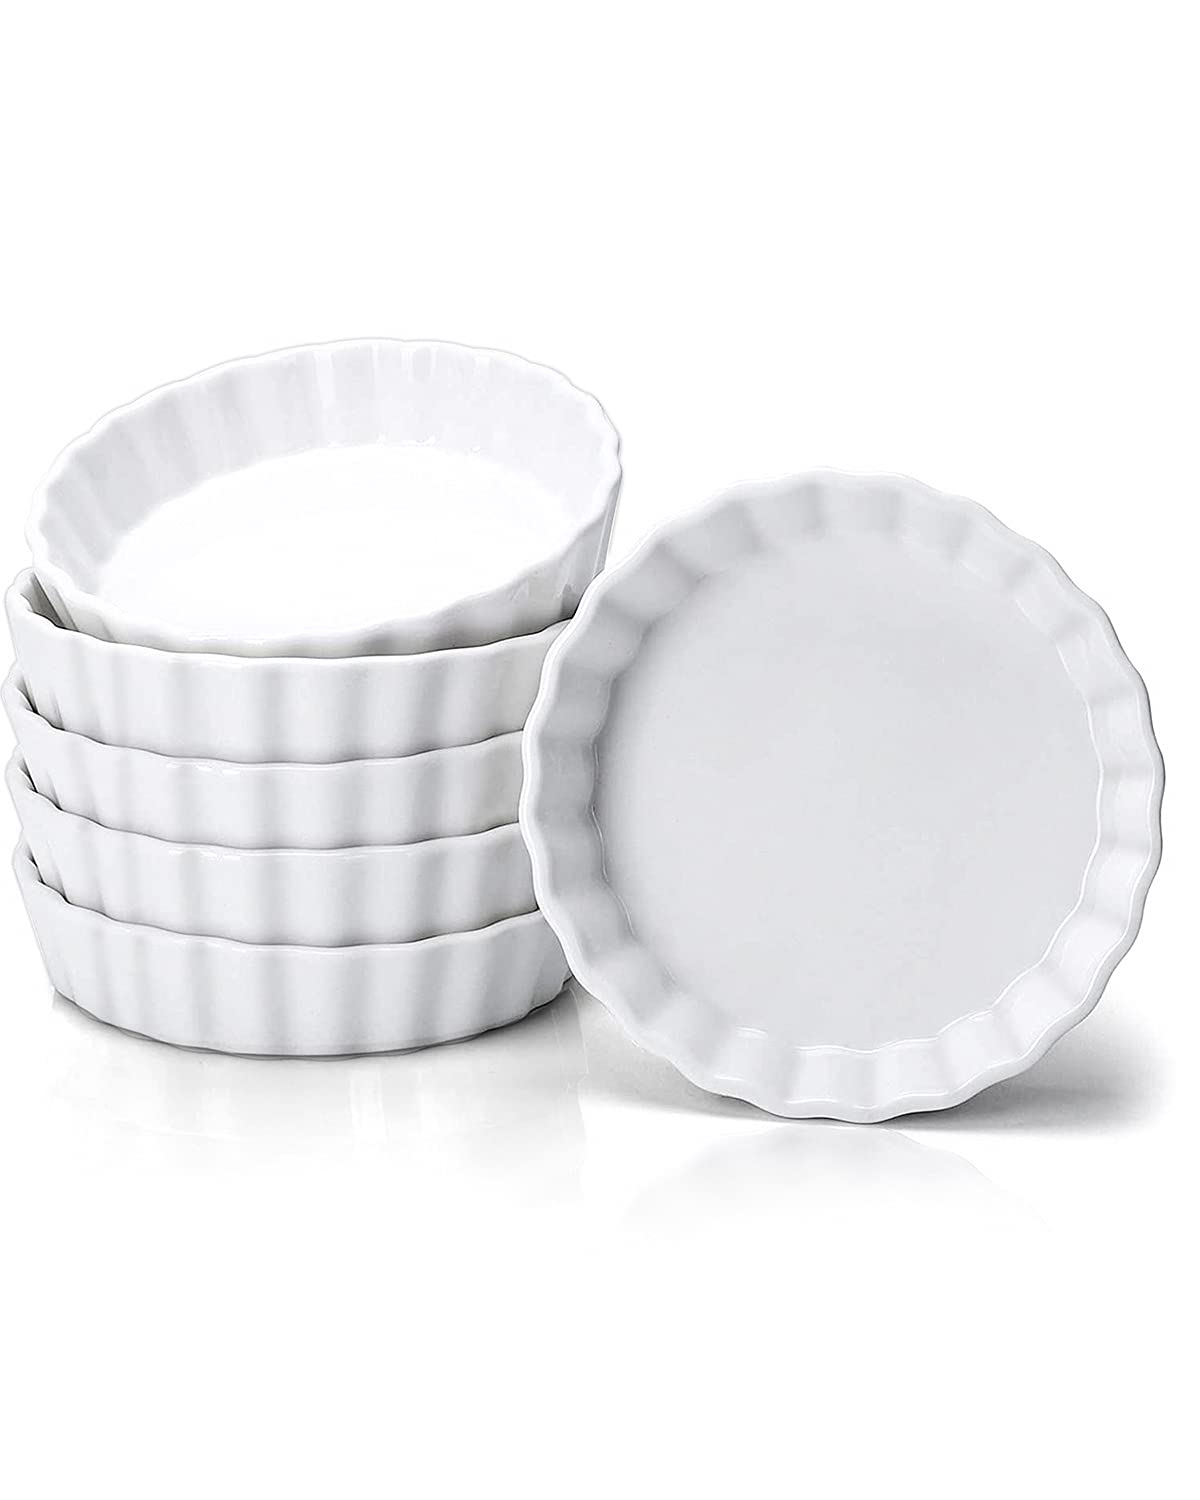 Taeochiy 8 Oz Creme Brulee Ramekins, Porcelain Ramekins Oven Safe, Round Tart Pan Mini Fluted Quiche Dishes, Set of 6, White